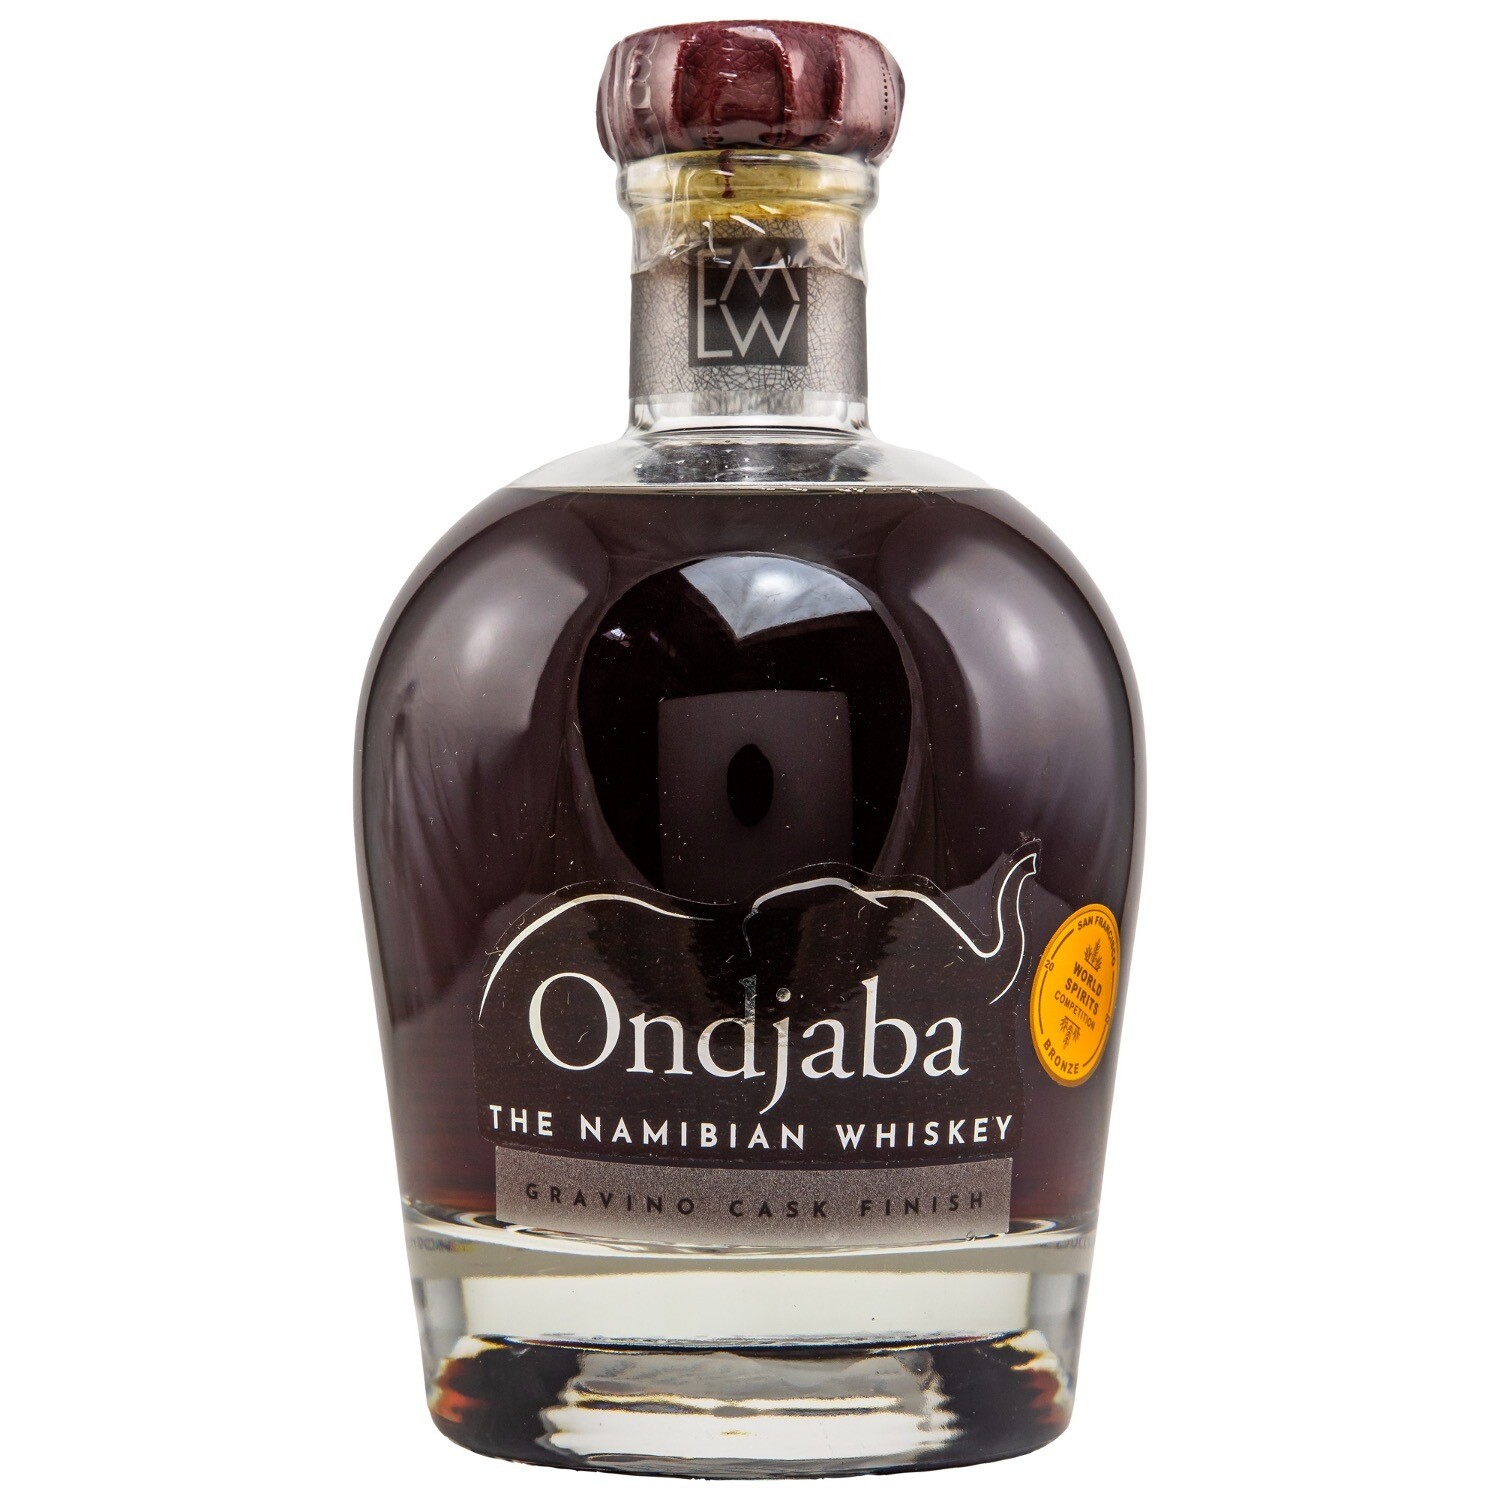 Ondjaba - The Namibian Whiskey - Gravino